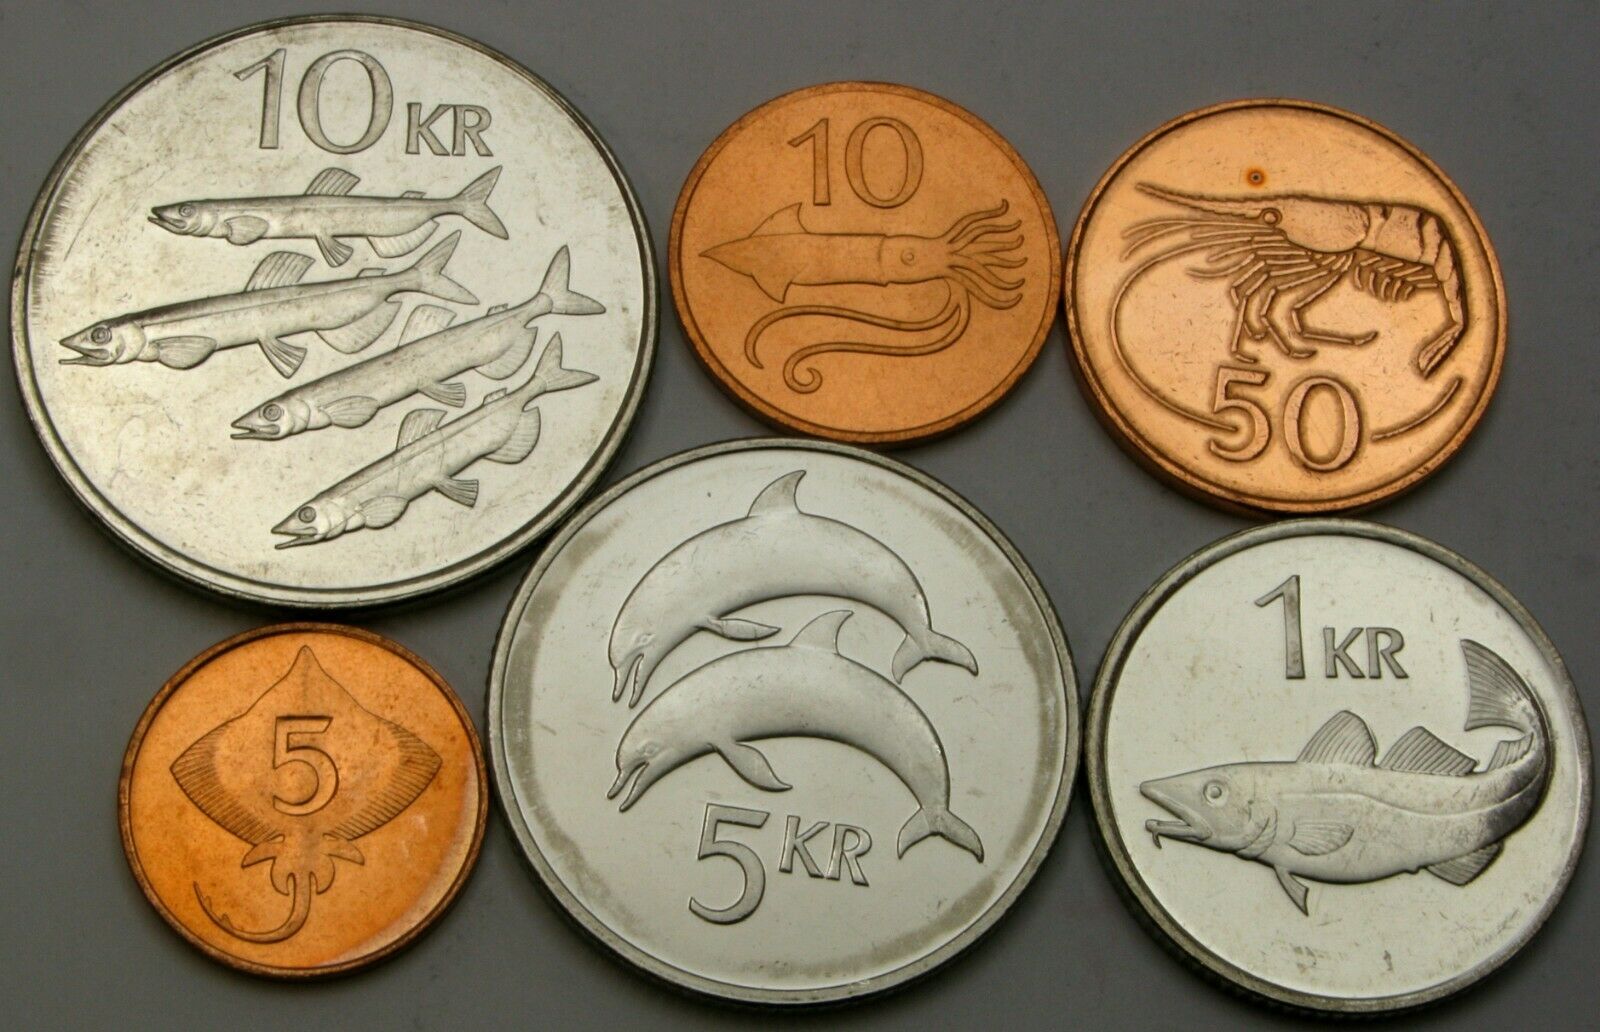 Iceland 5 Aurar / 10 Kronur 1981/2007   - Lot Of 6 Coins - Unc *